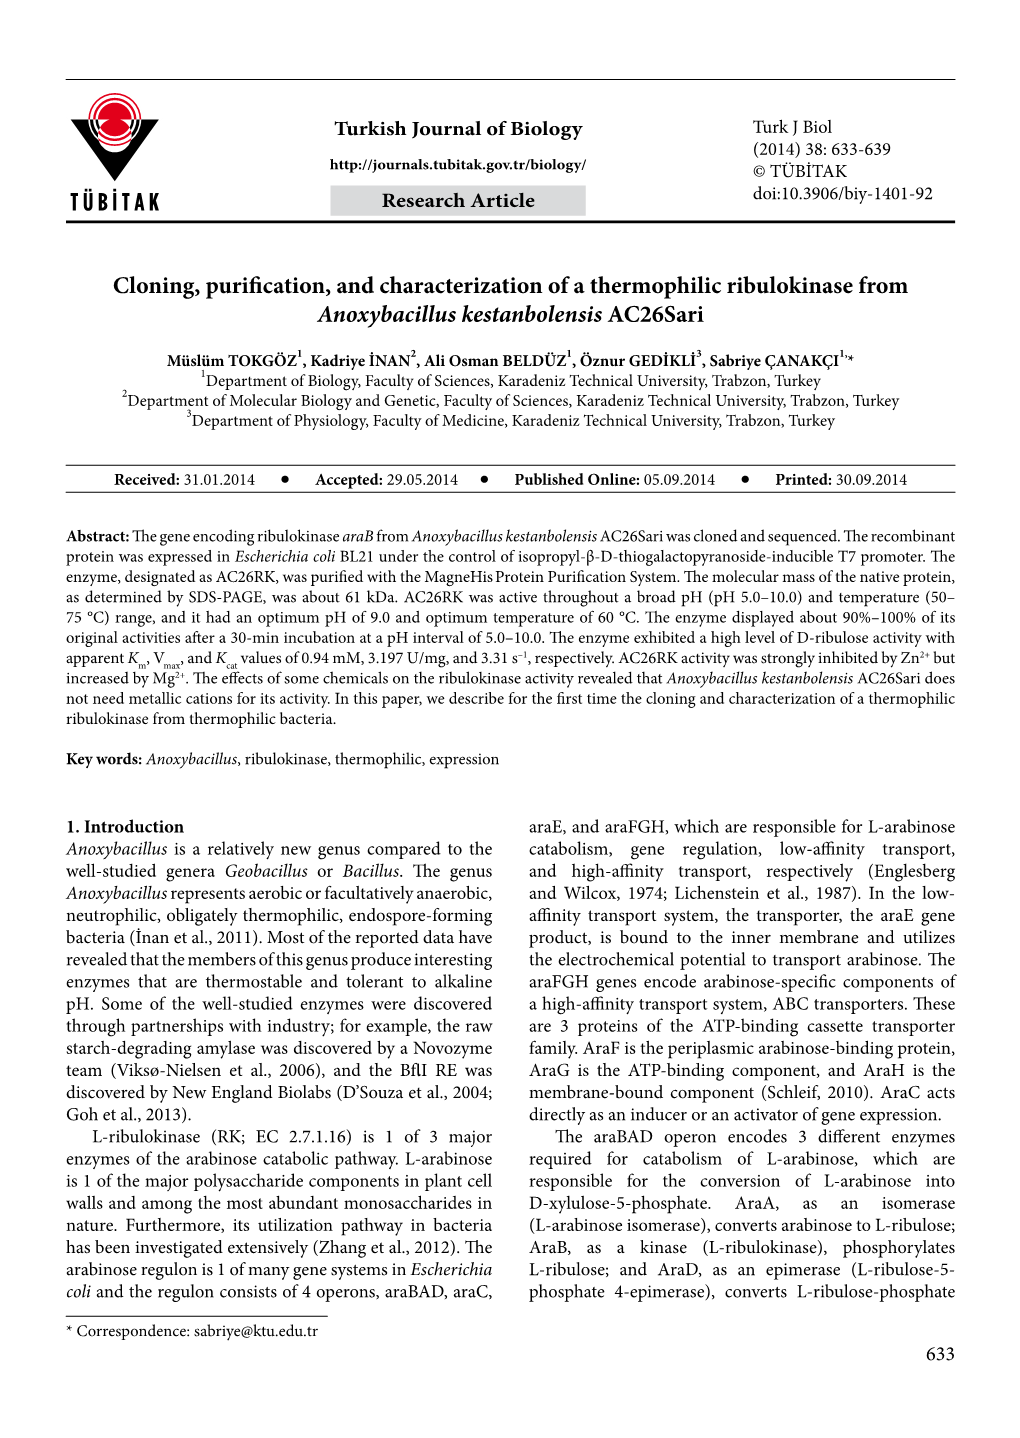 Cloning, Purification, and Characterization of a Thermophilic Ribulokinase from Anoxybacillus Kestanbolensis Ac26sari